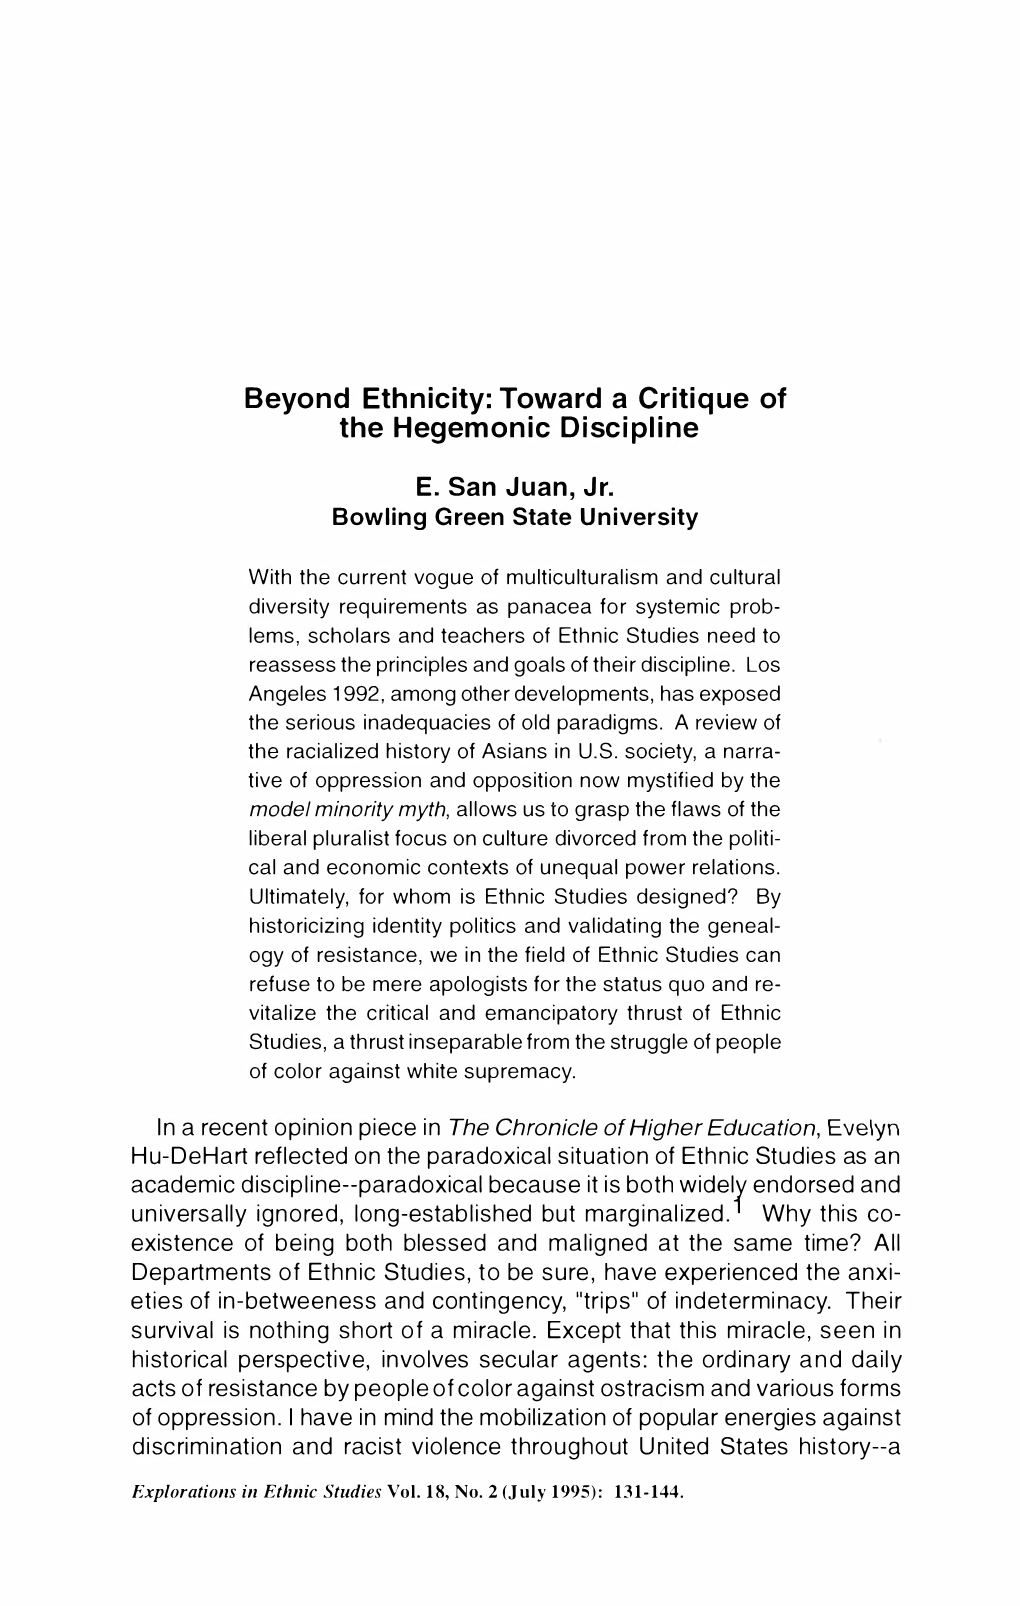 Beyond Ethnicity: Toward a Critique of the Hegemonic Discipline E. San